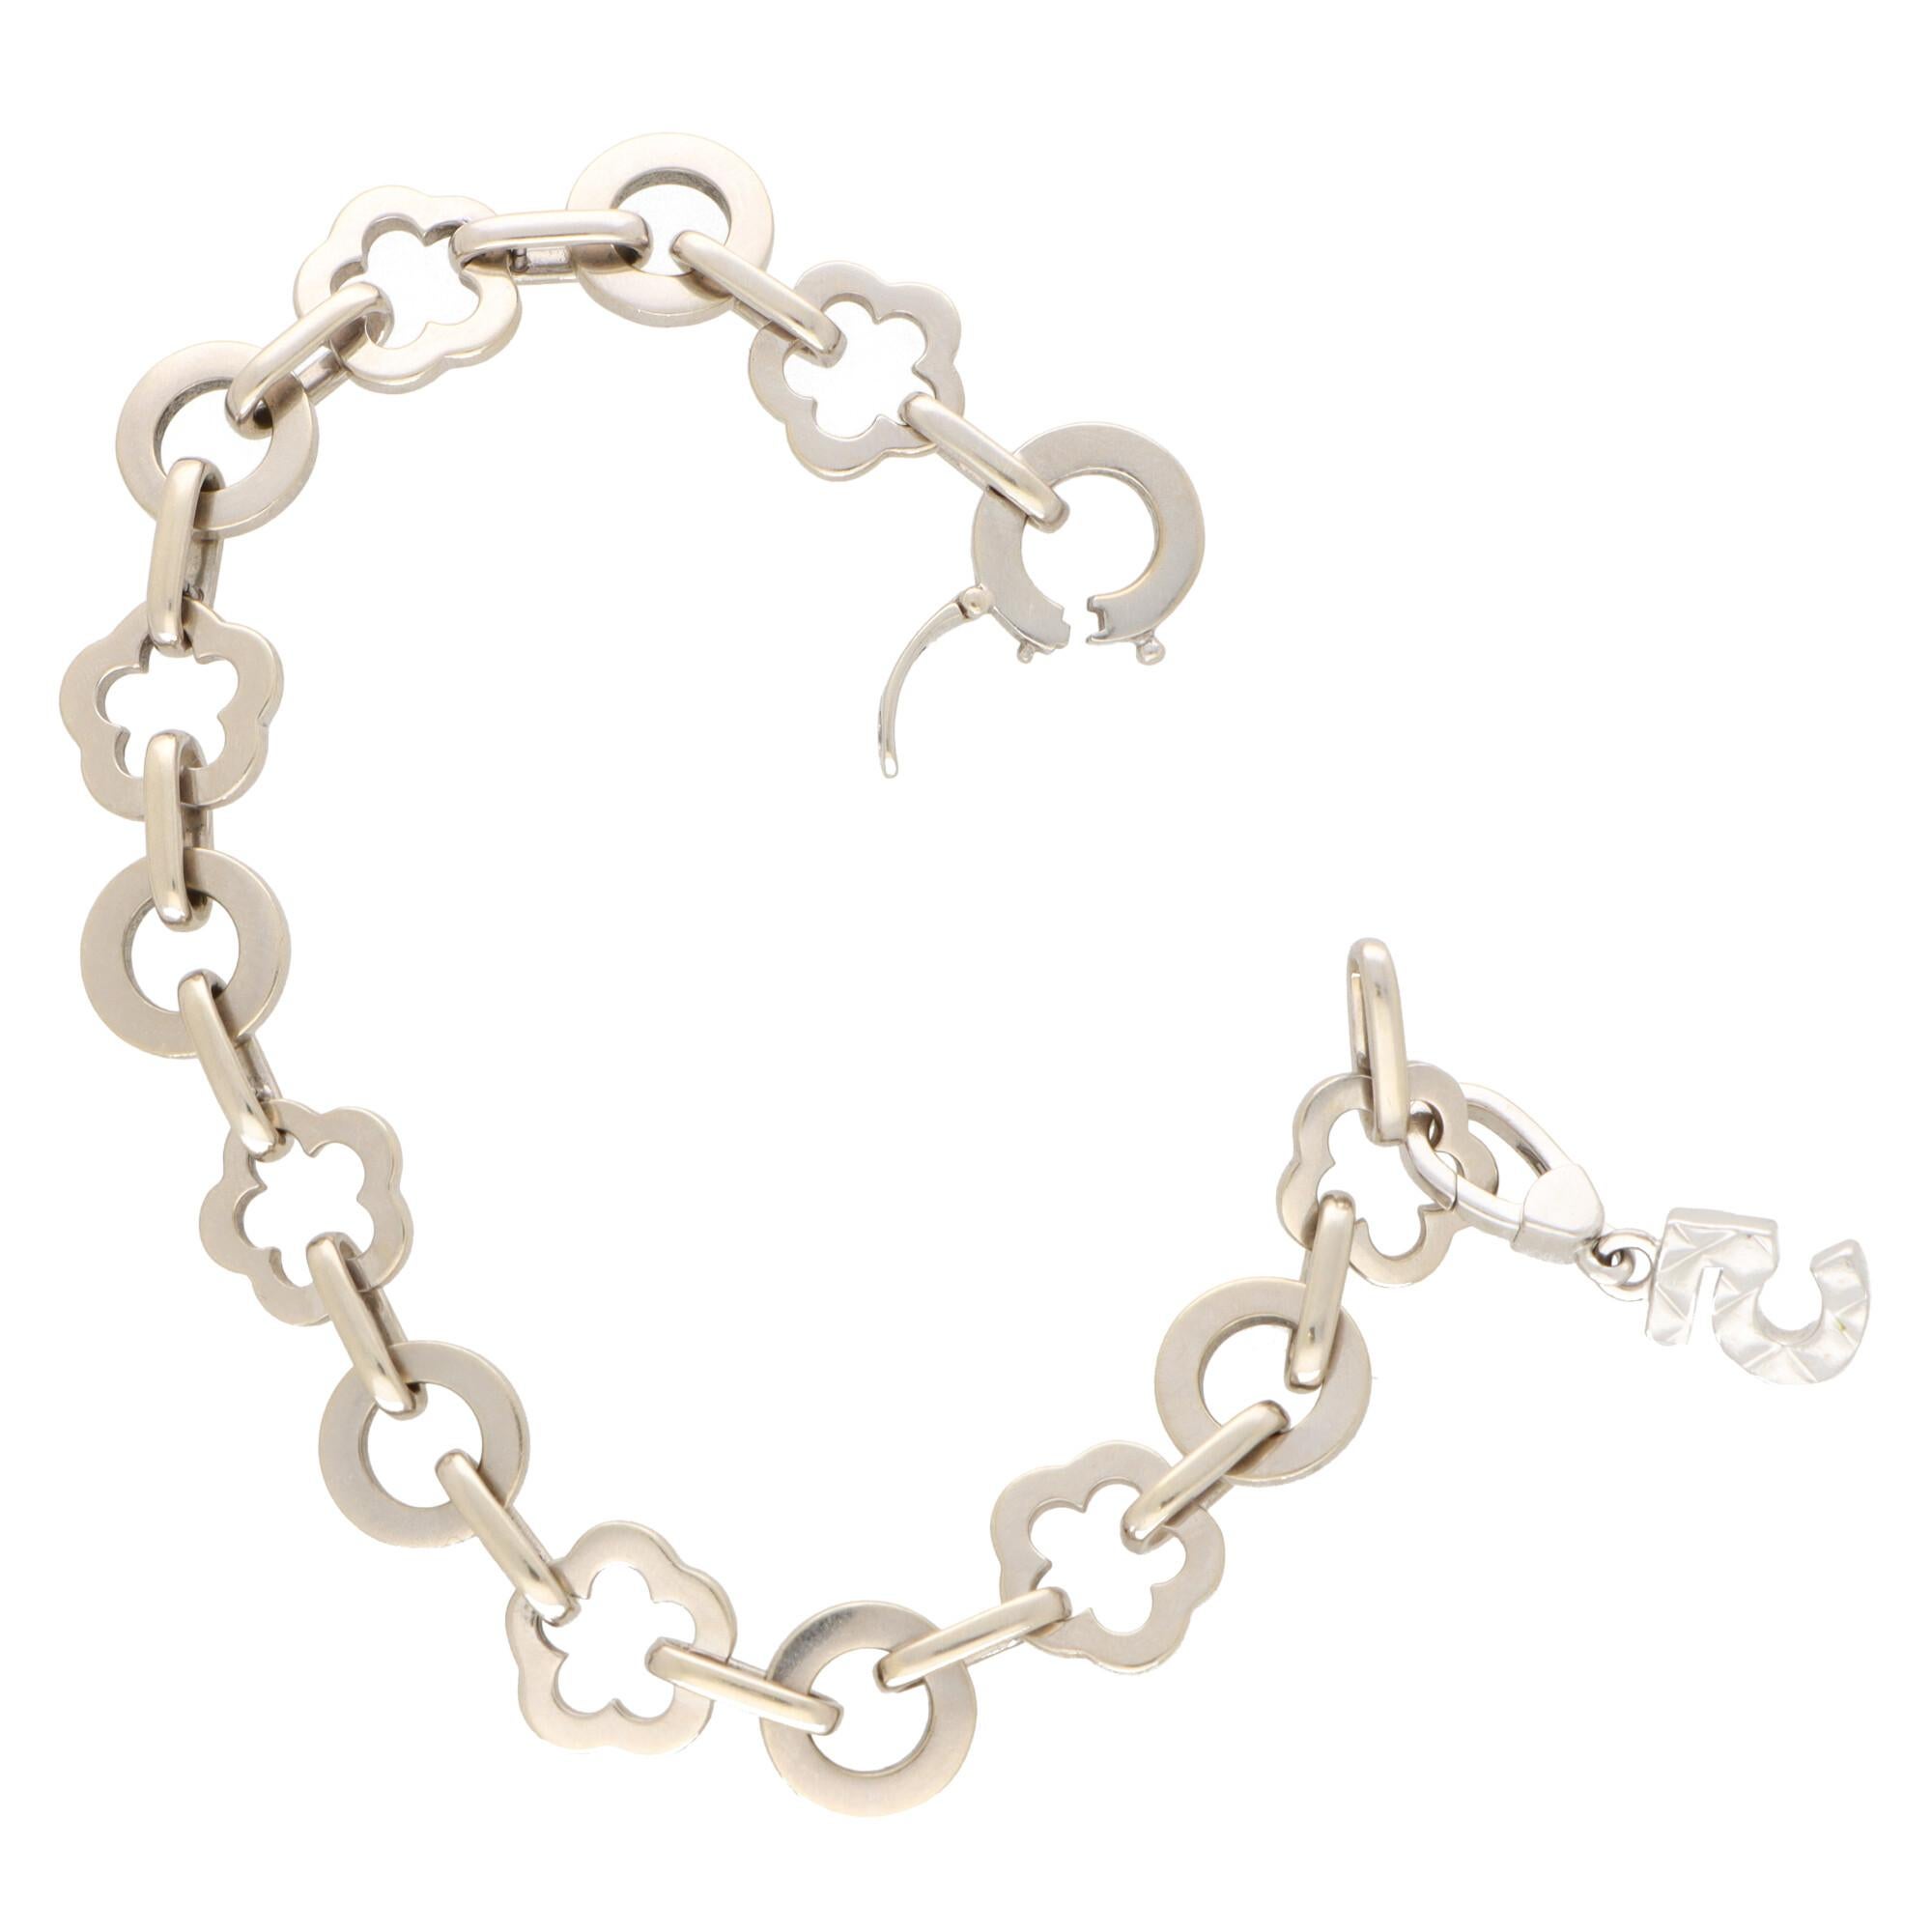 Retro Vintage Chanel Camélia Charm Bracelet in 18k White Gold